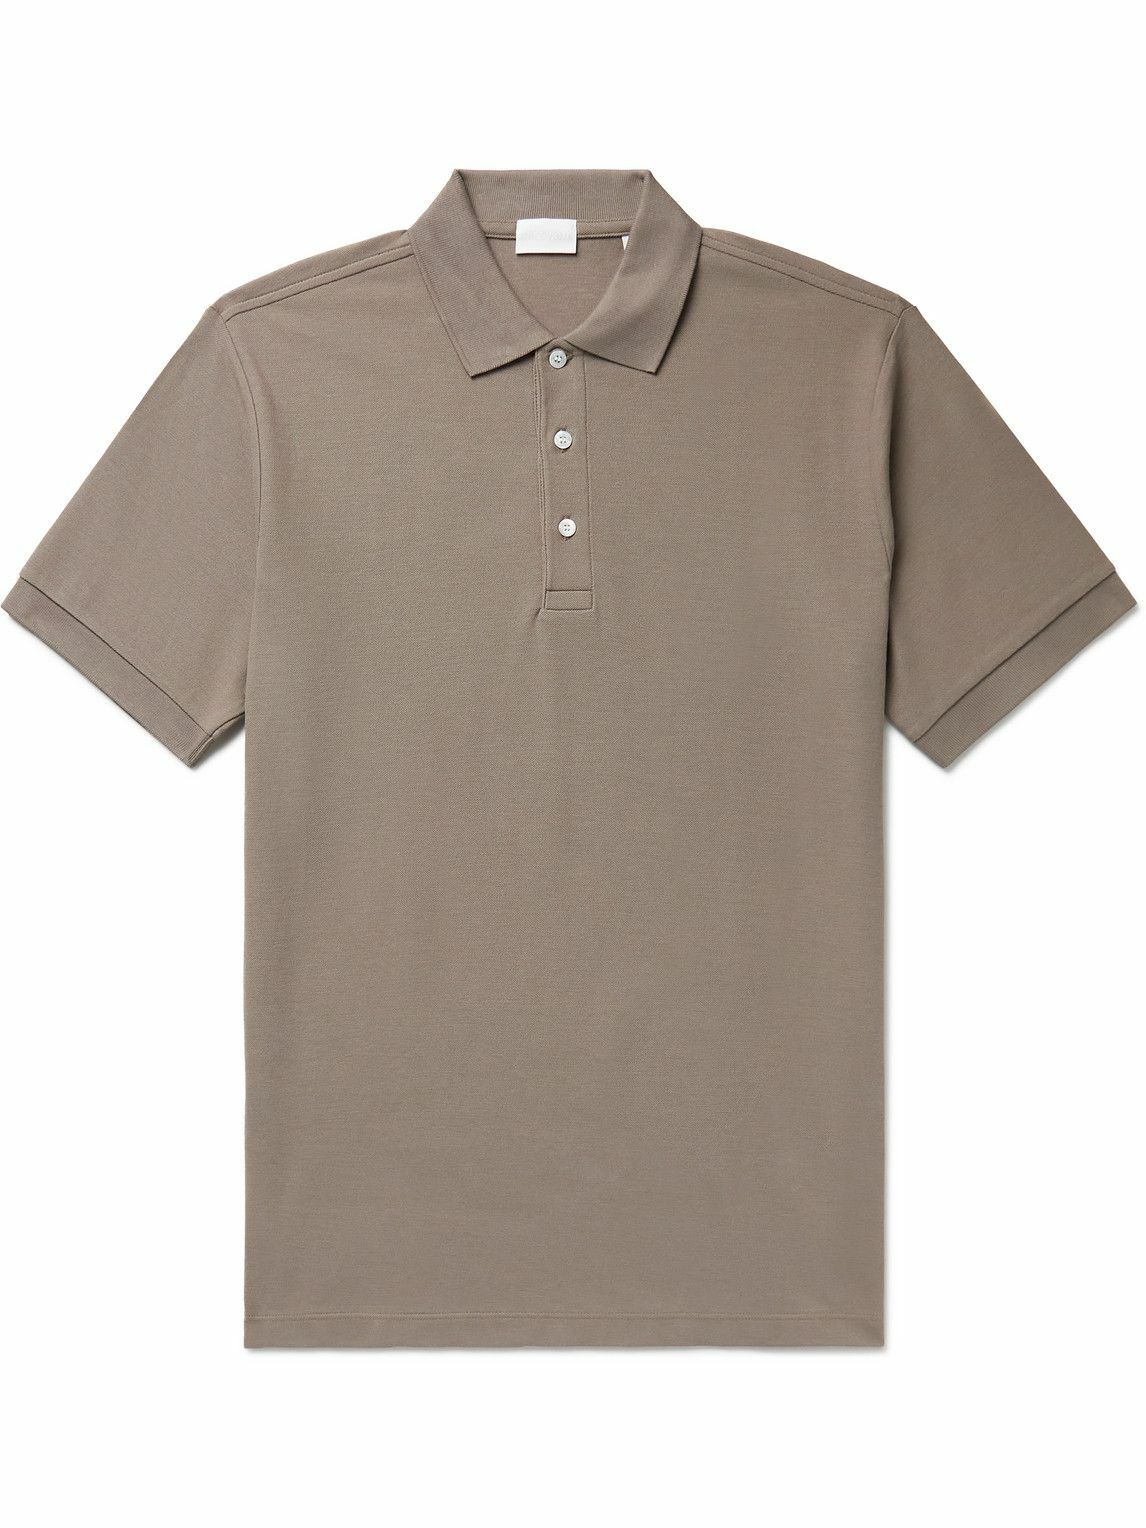 Handvaerk - Pima Cotton-Piqué Polo Shirt - Neutrals Handvaerk